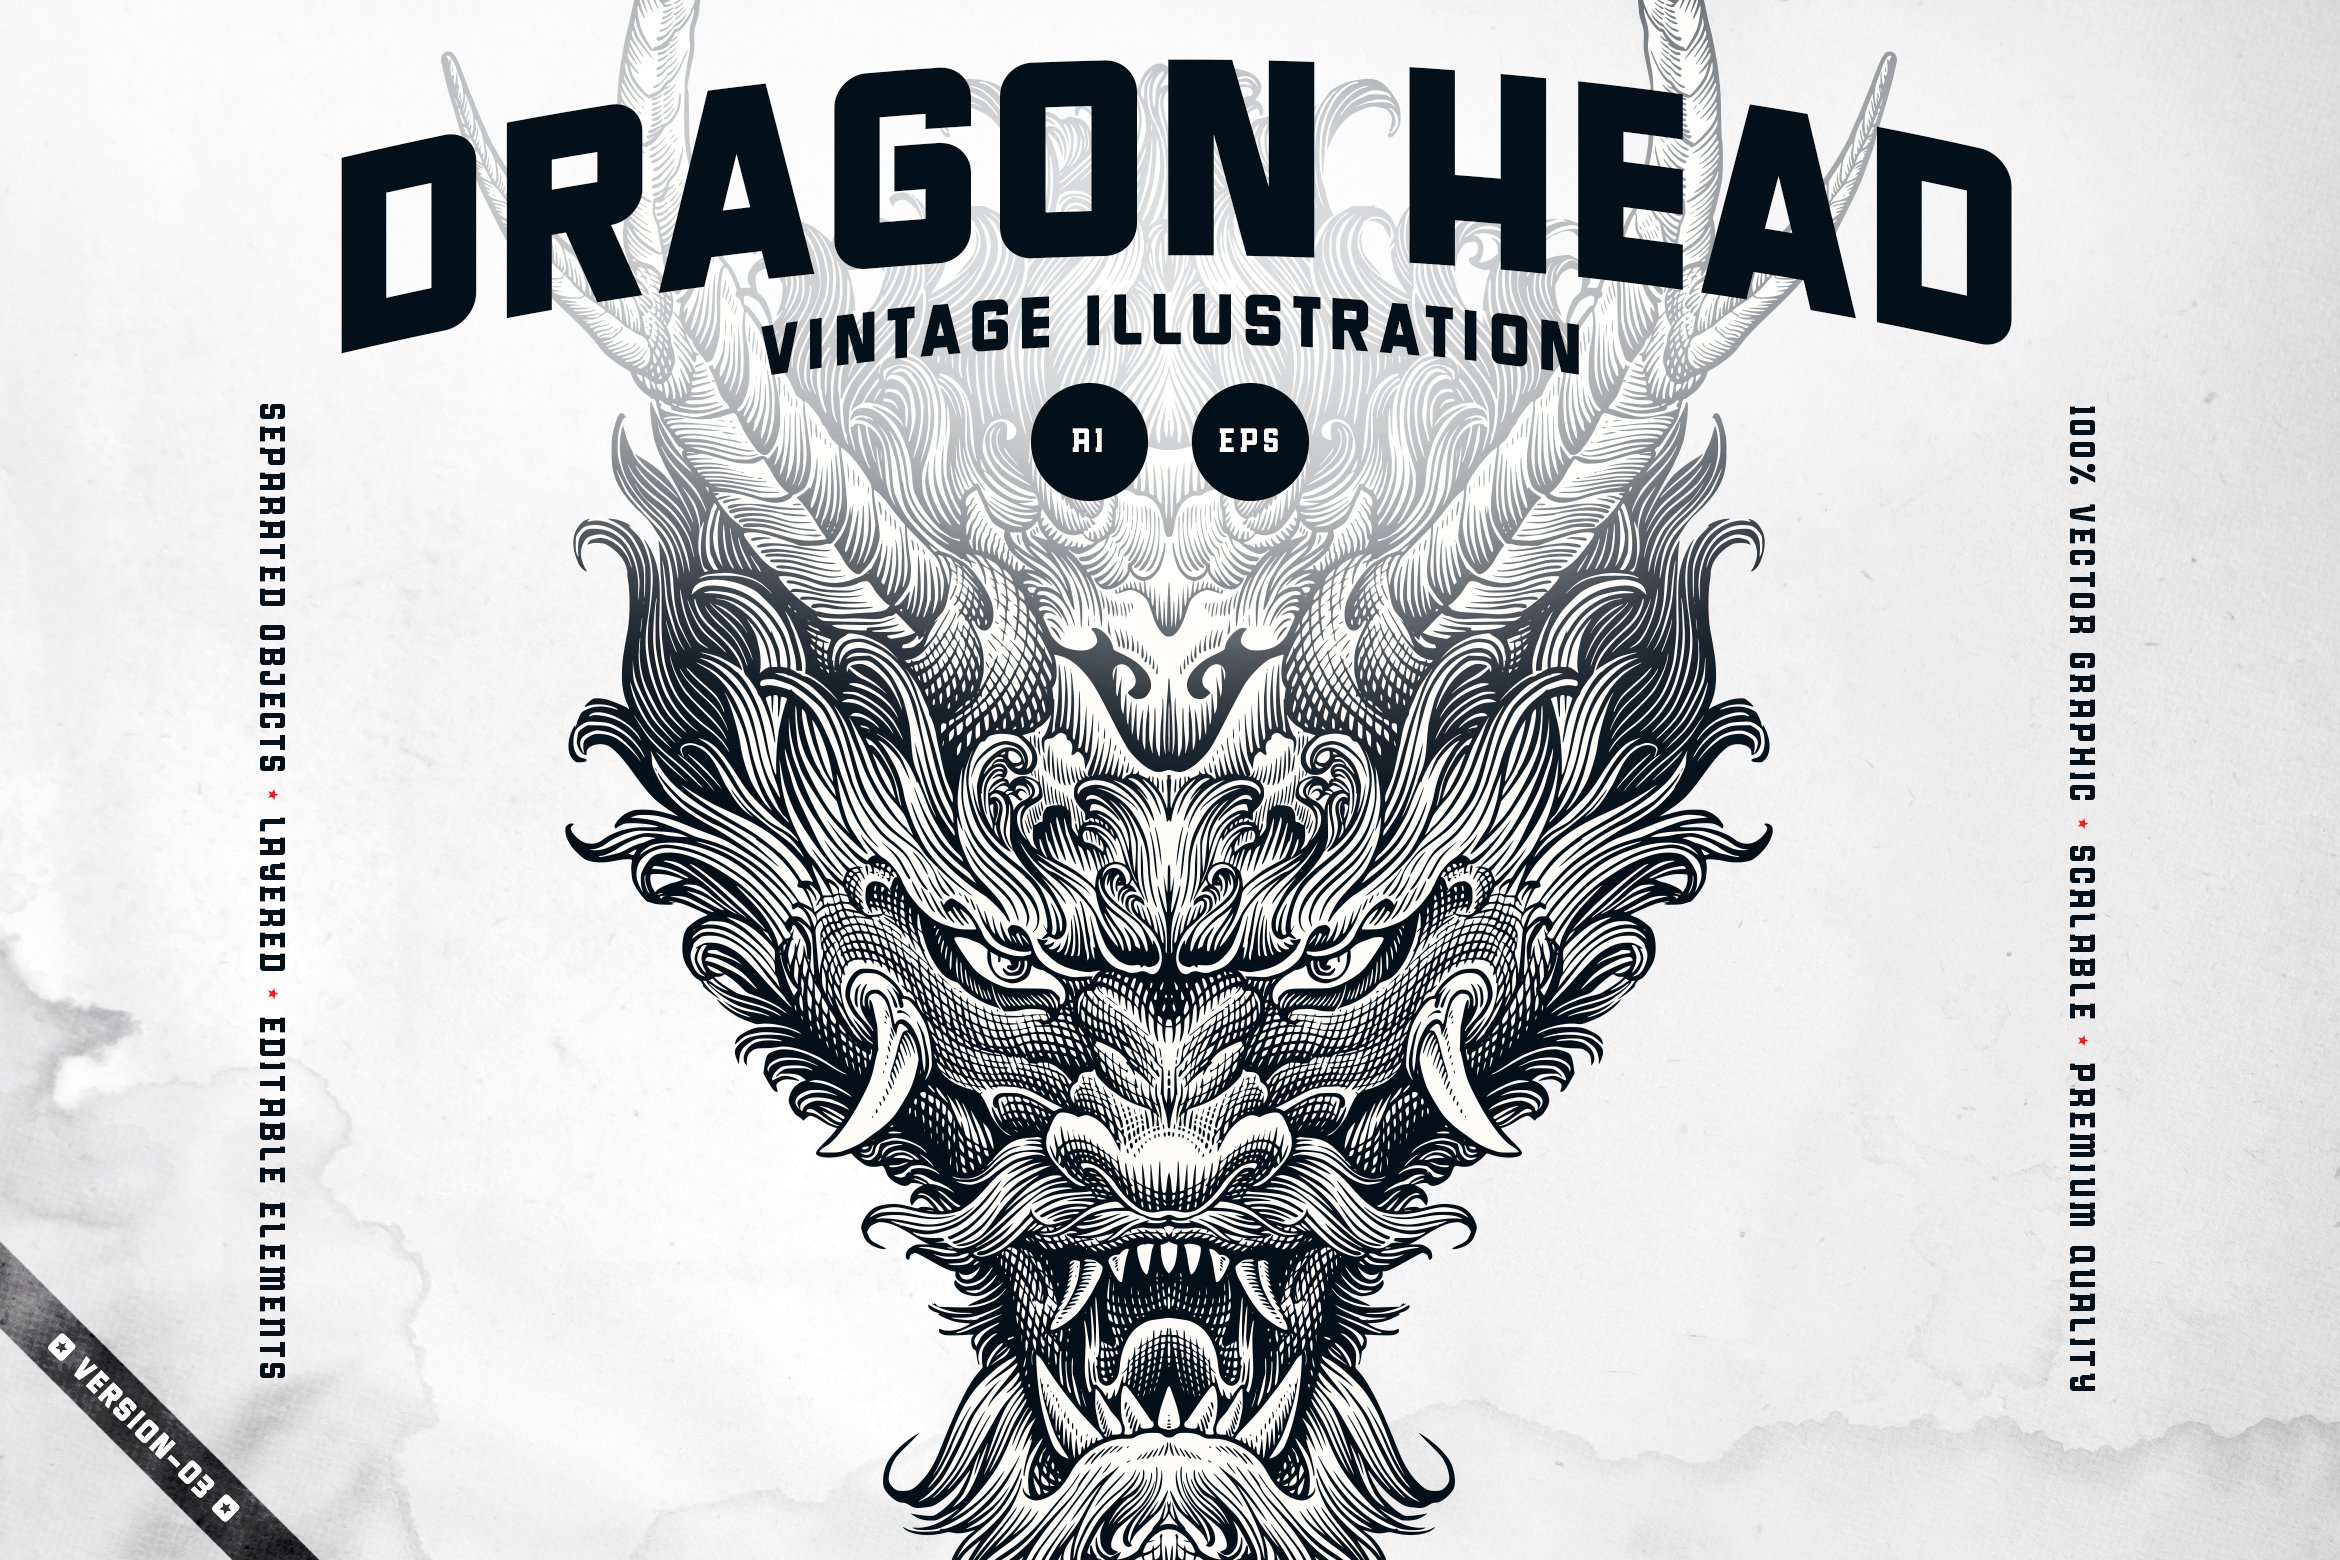 Dragon Head Illustration cover image.